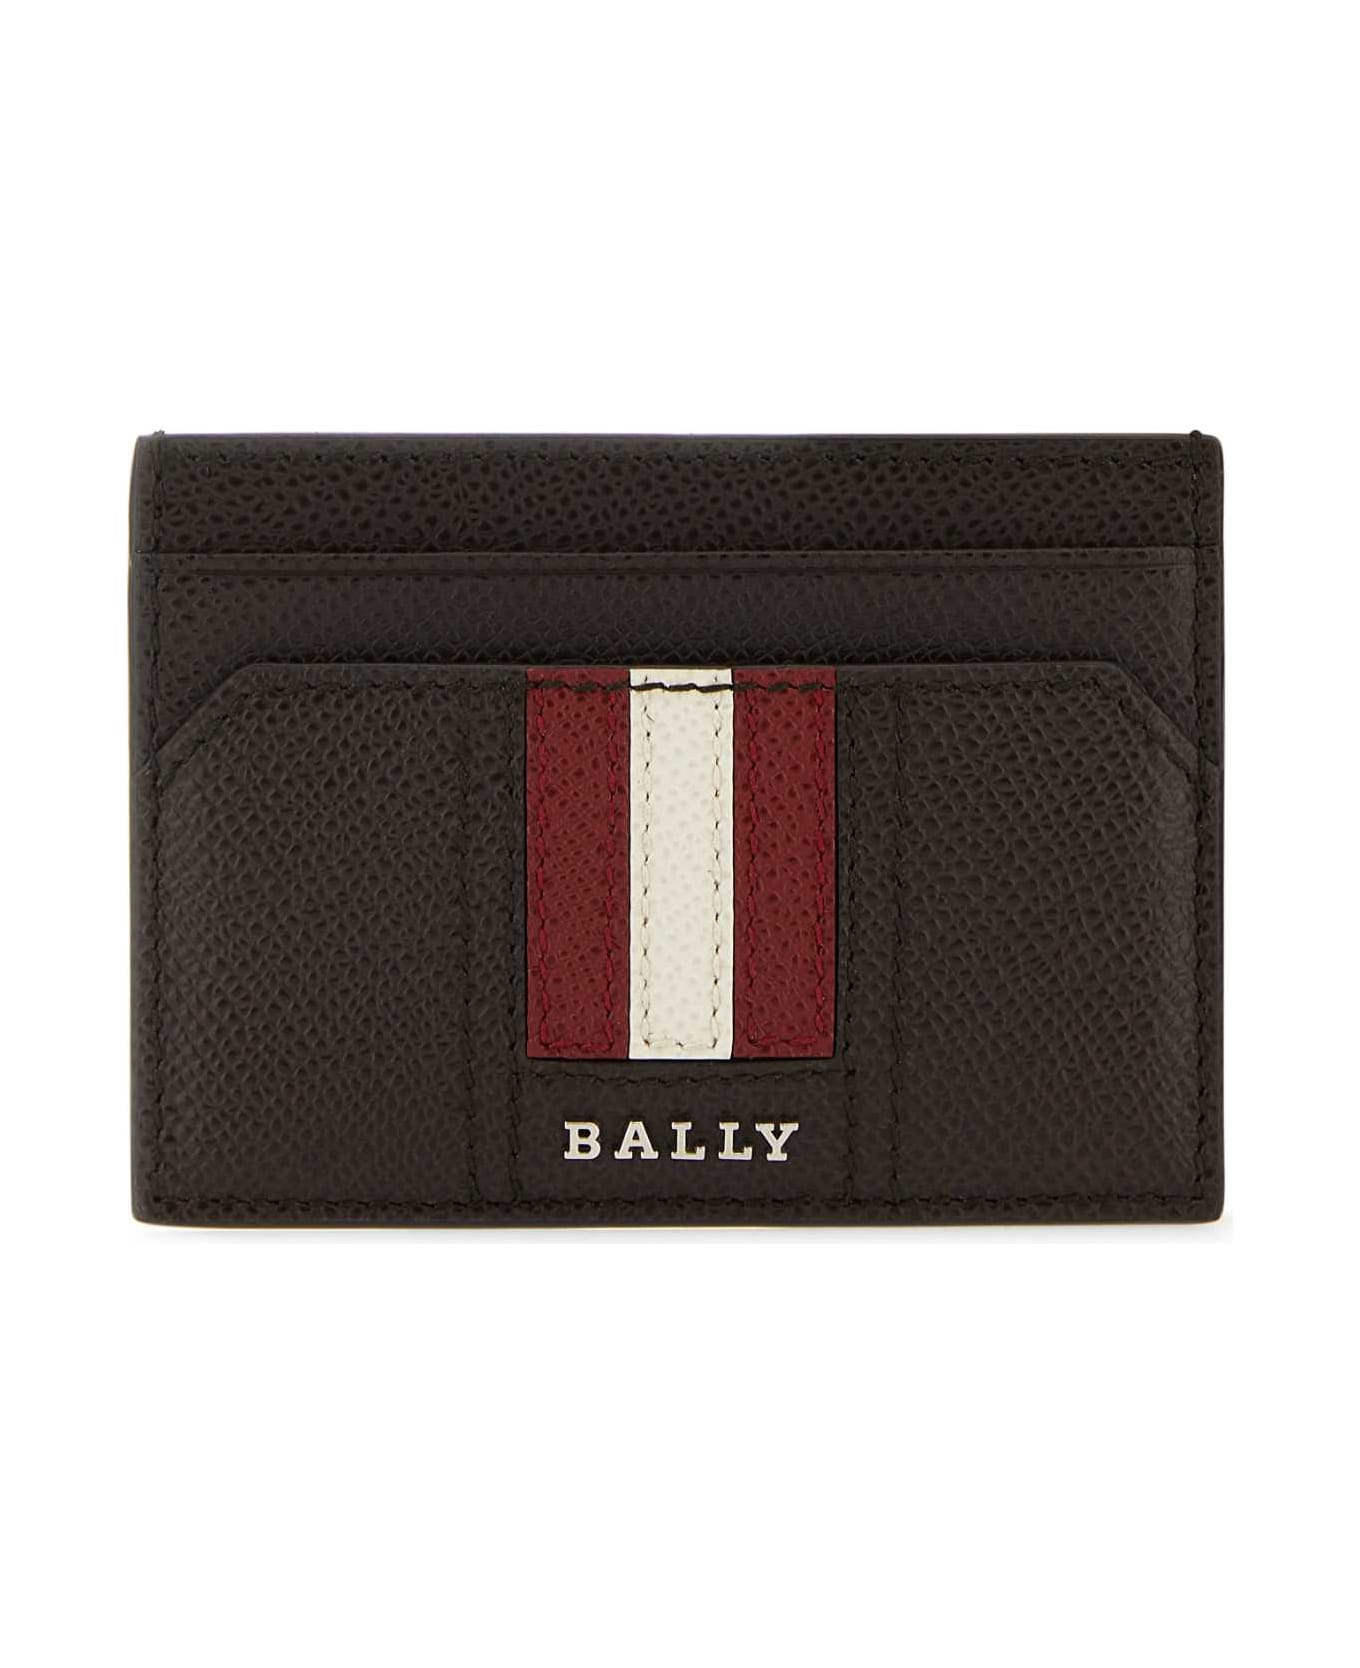 Bally Chocolate Leather Thar Card Holder - F021 財布